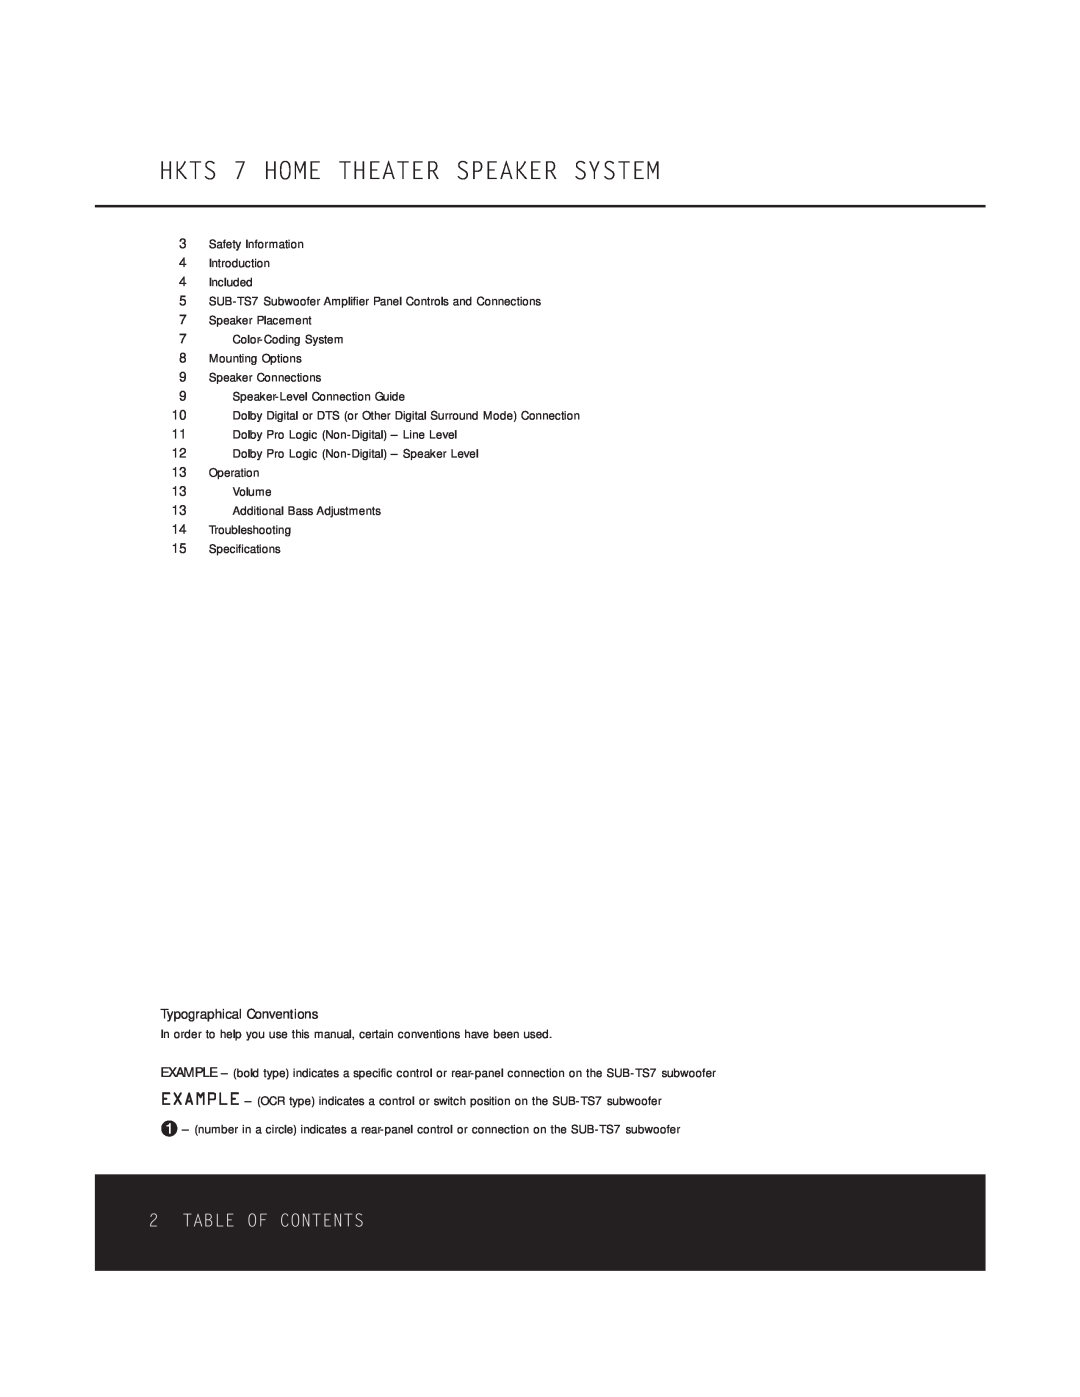 Harman-Kardon HKTS 5 OM owner manual HKTS 7 HOME THEATER SPEAKER SYSTEM, Table Of Contents 